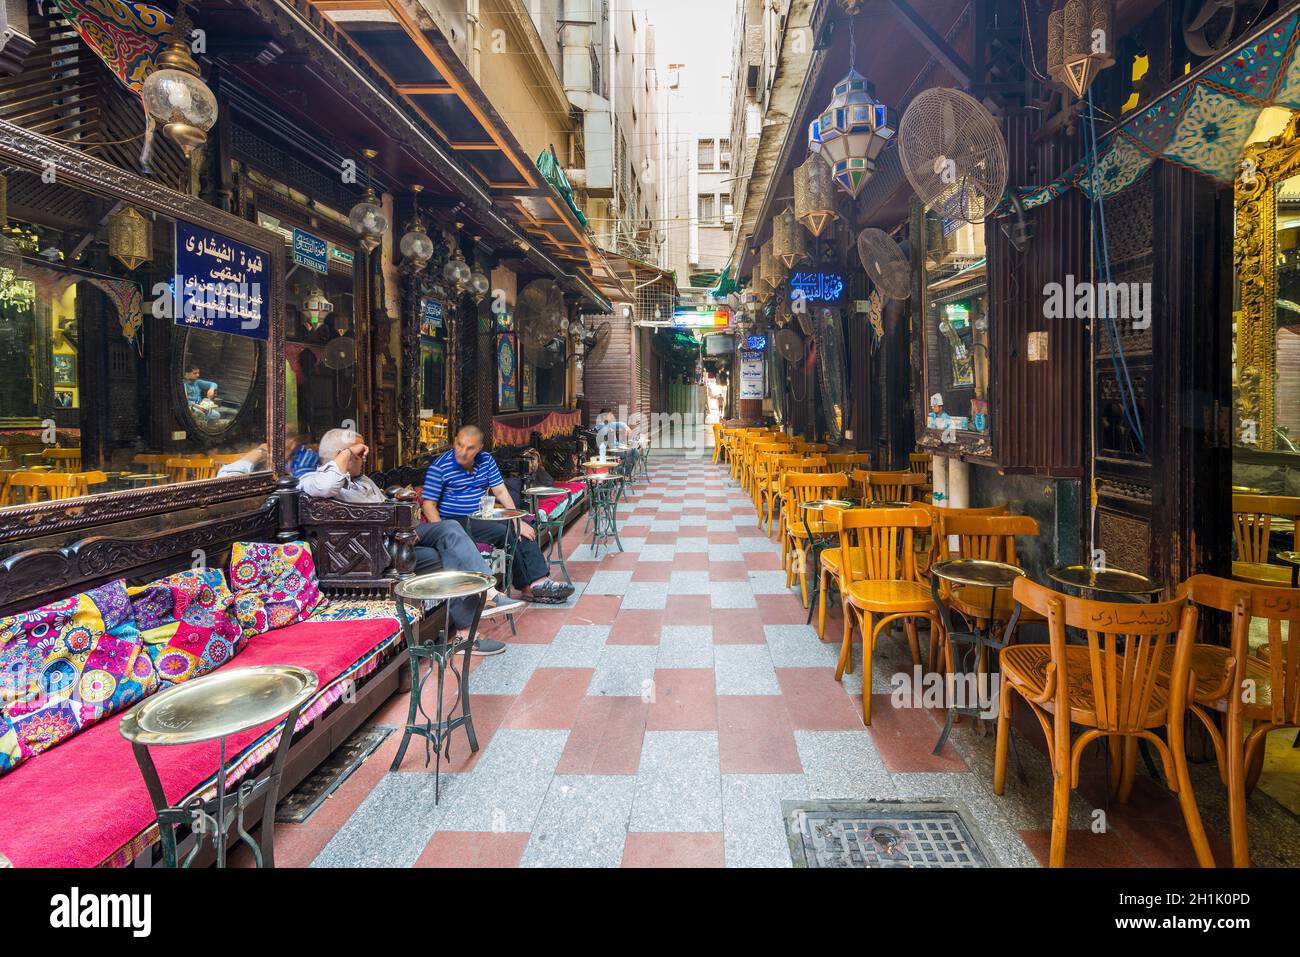 Cairo, Egypt- September 25 2021: Old famous coffeehouse, El Fishawi, located in historic Mamluk era Khan al-Khalili famous bazaar and souq Stock Photo